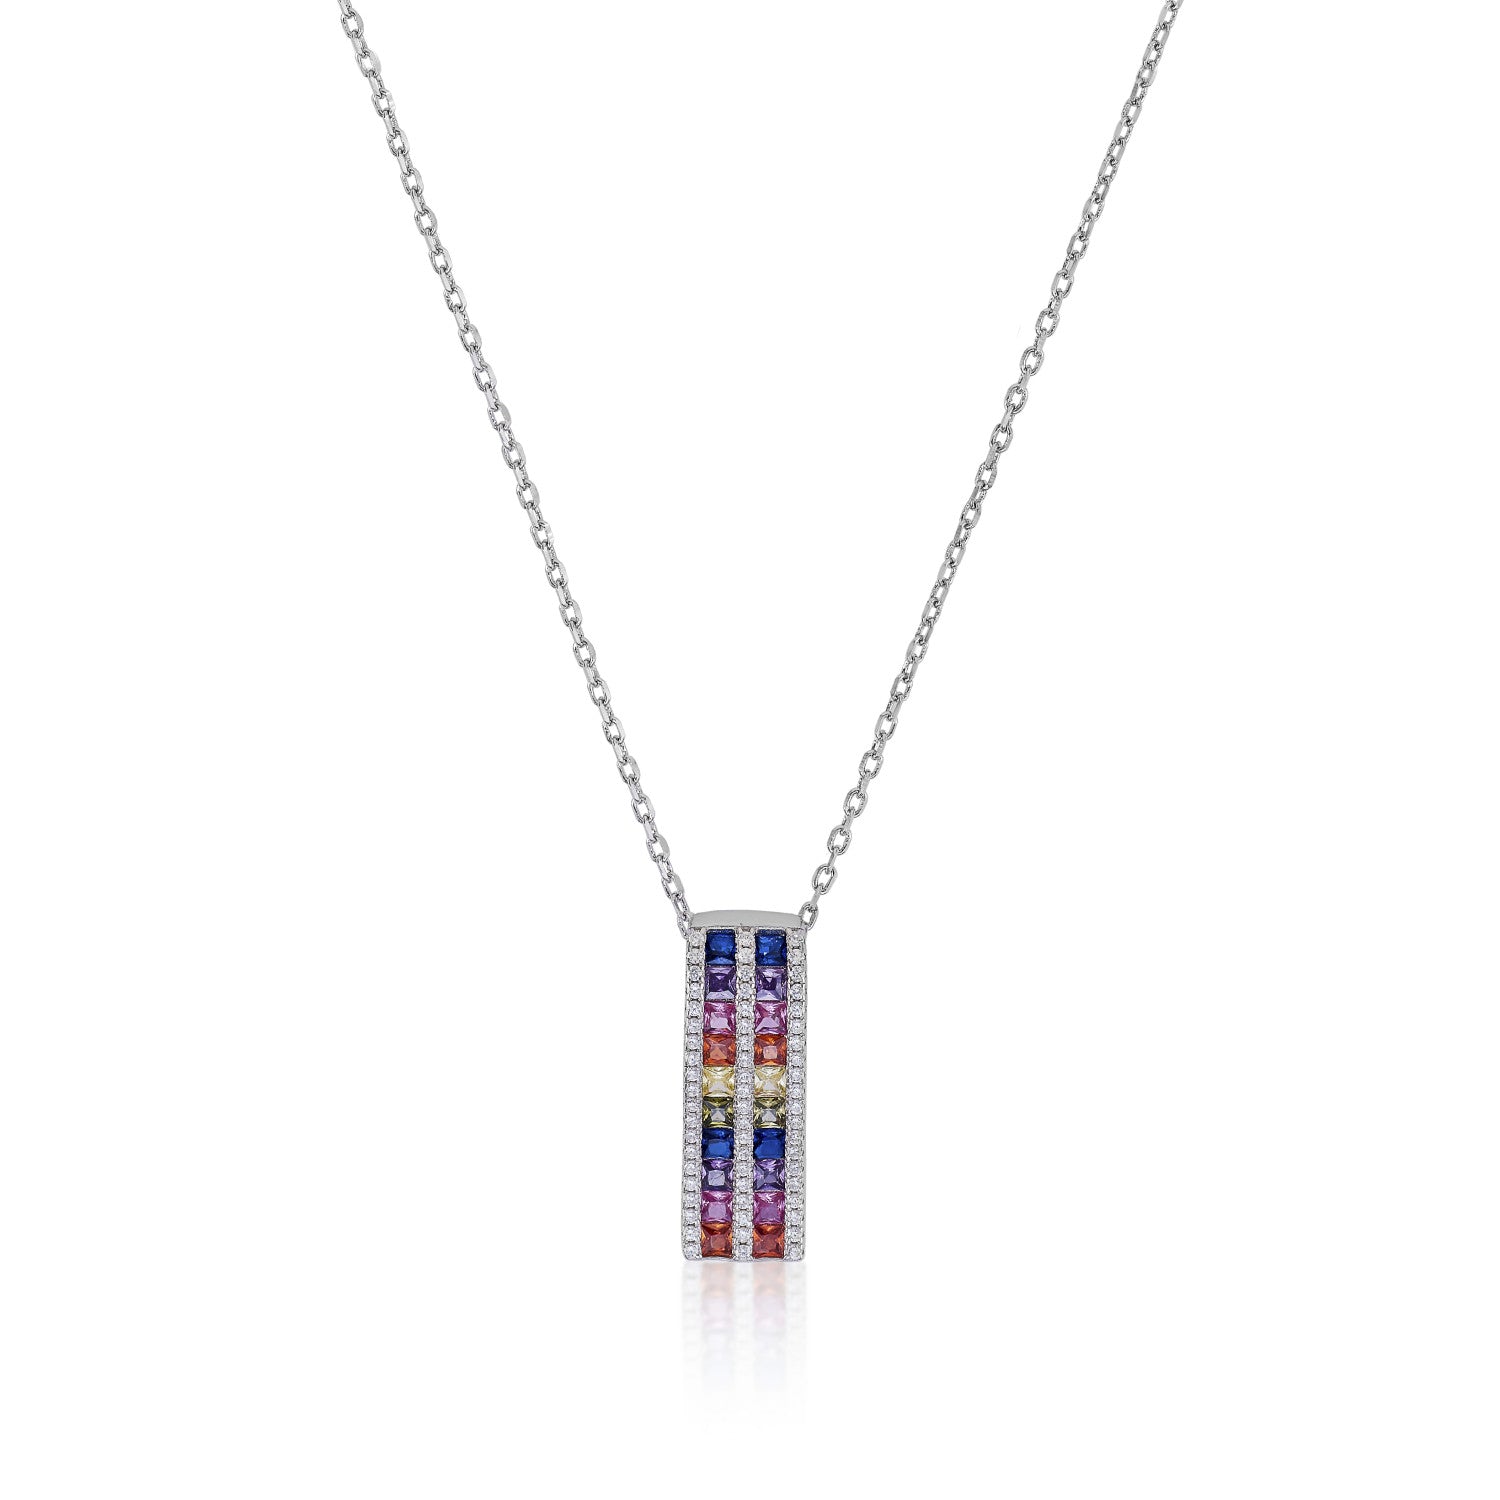 Necklaces with stones double rail multicolor design